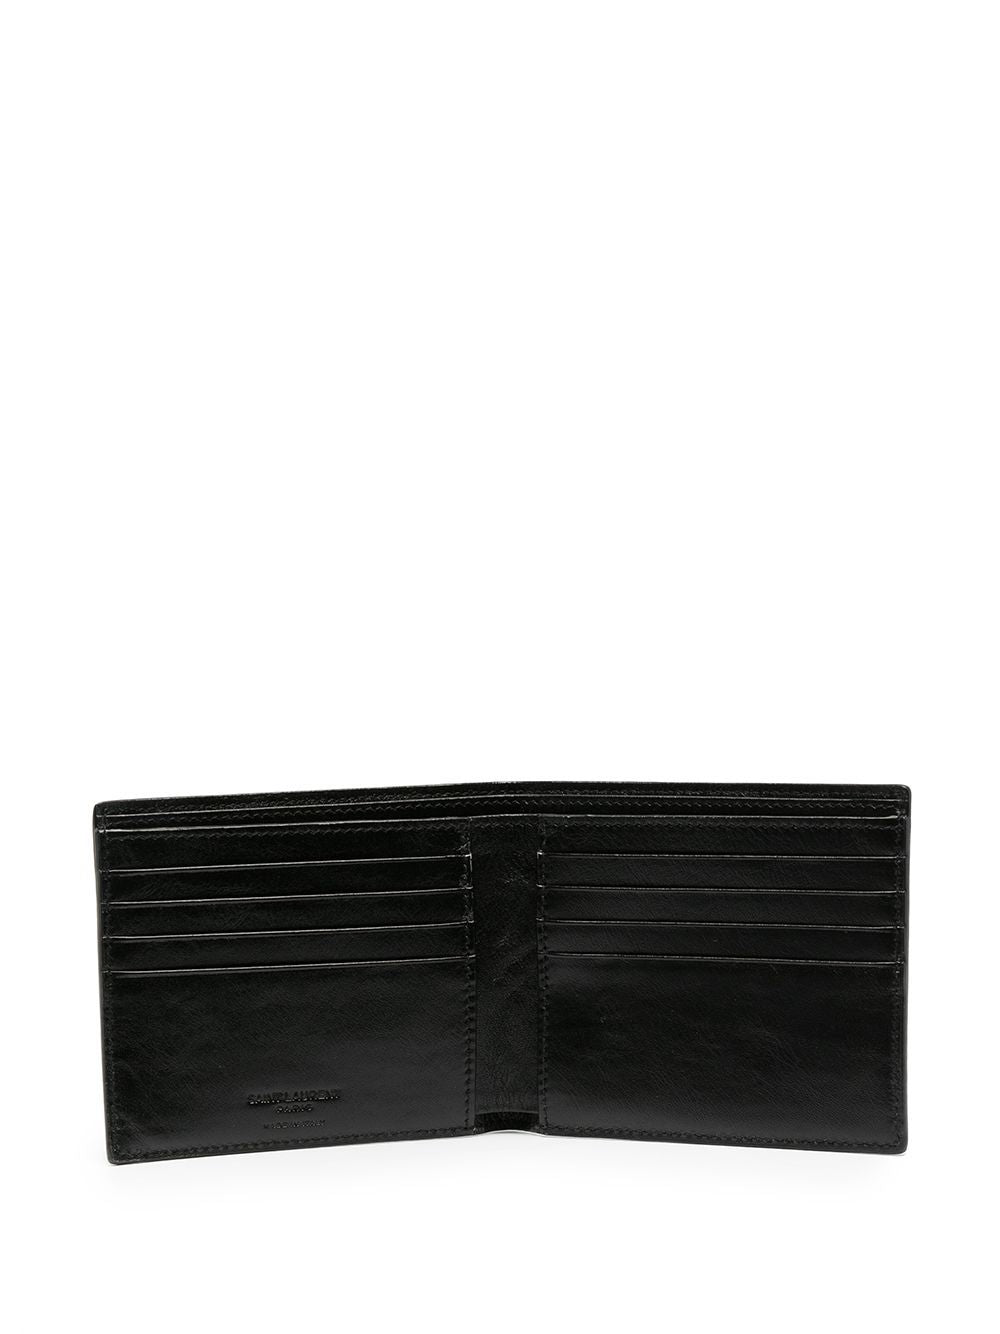 SAINT LAURENT Black Calf Leather Monogram Wallet for Men - SS23